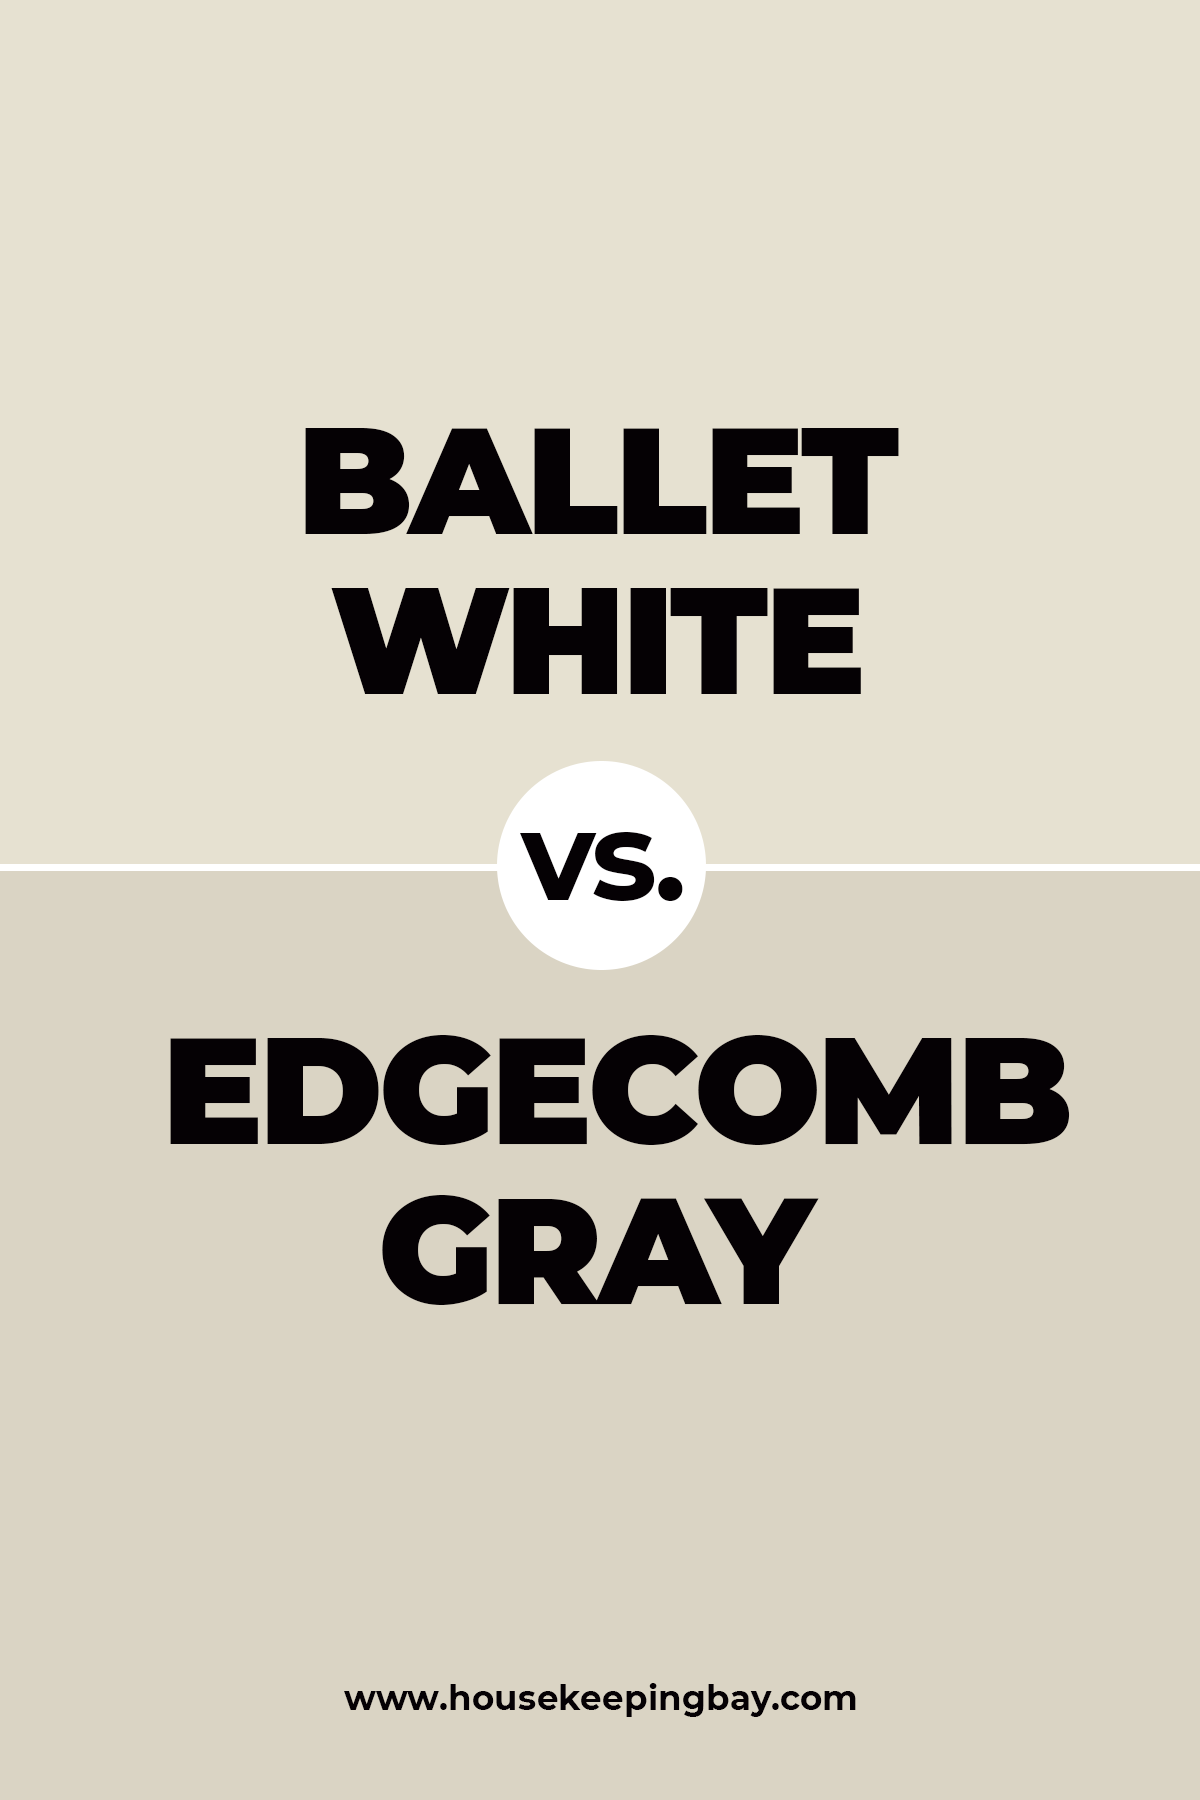 Ballet White vs. Edgecomb Gray